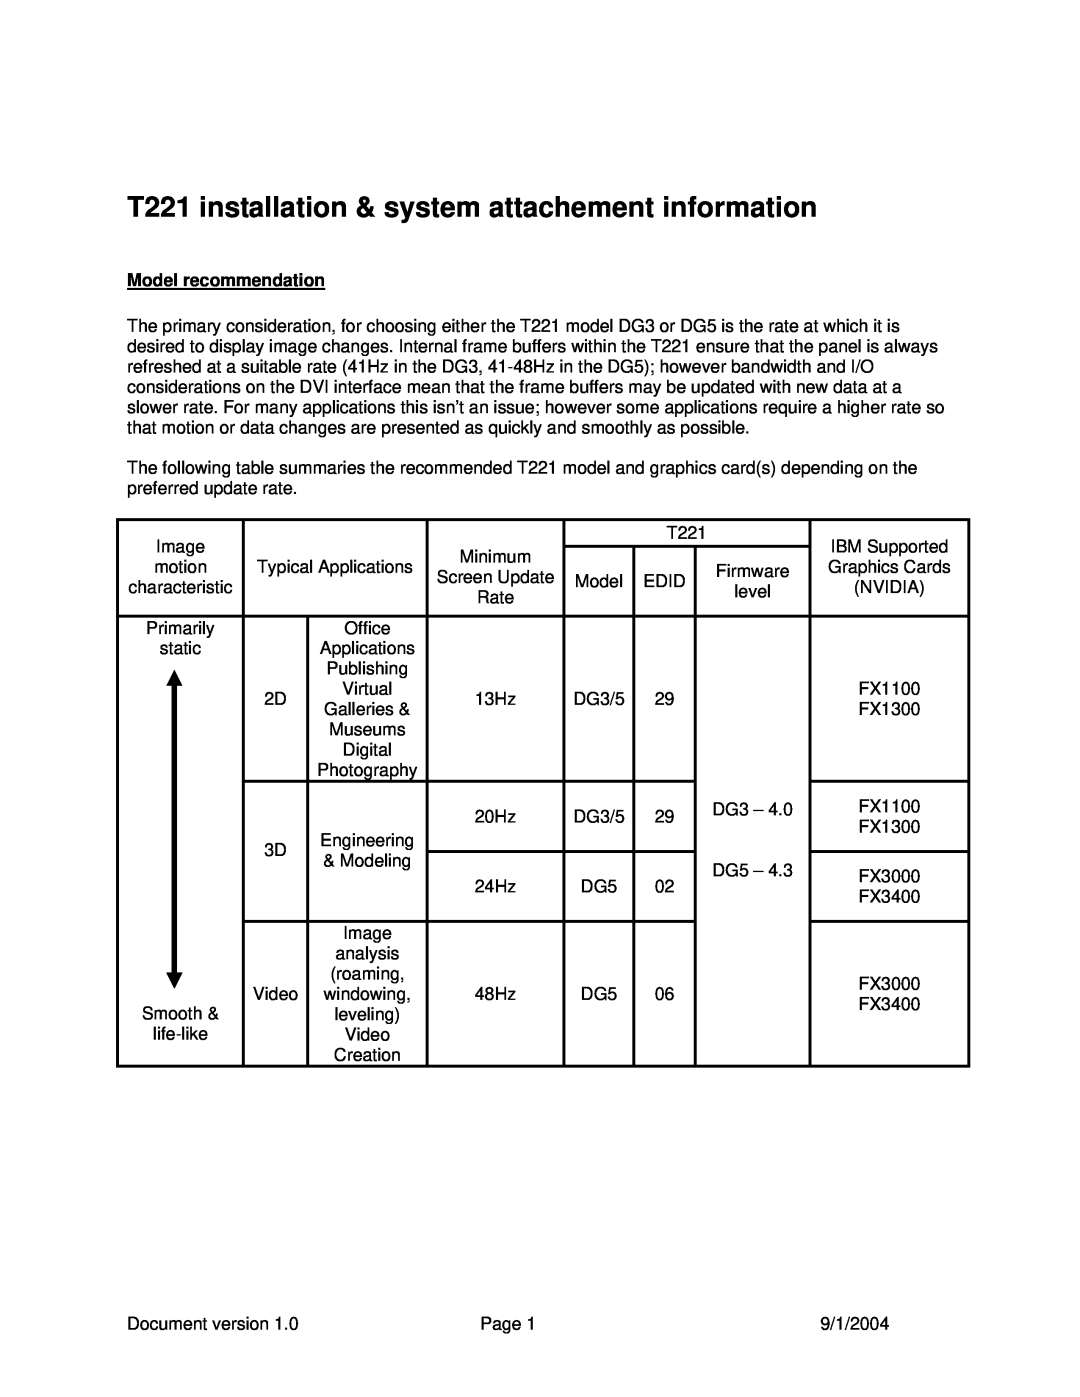 Lenovo 9503-DG5, 9503-DG3 manual Model recommendation, T221 installation & system attachement information 